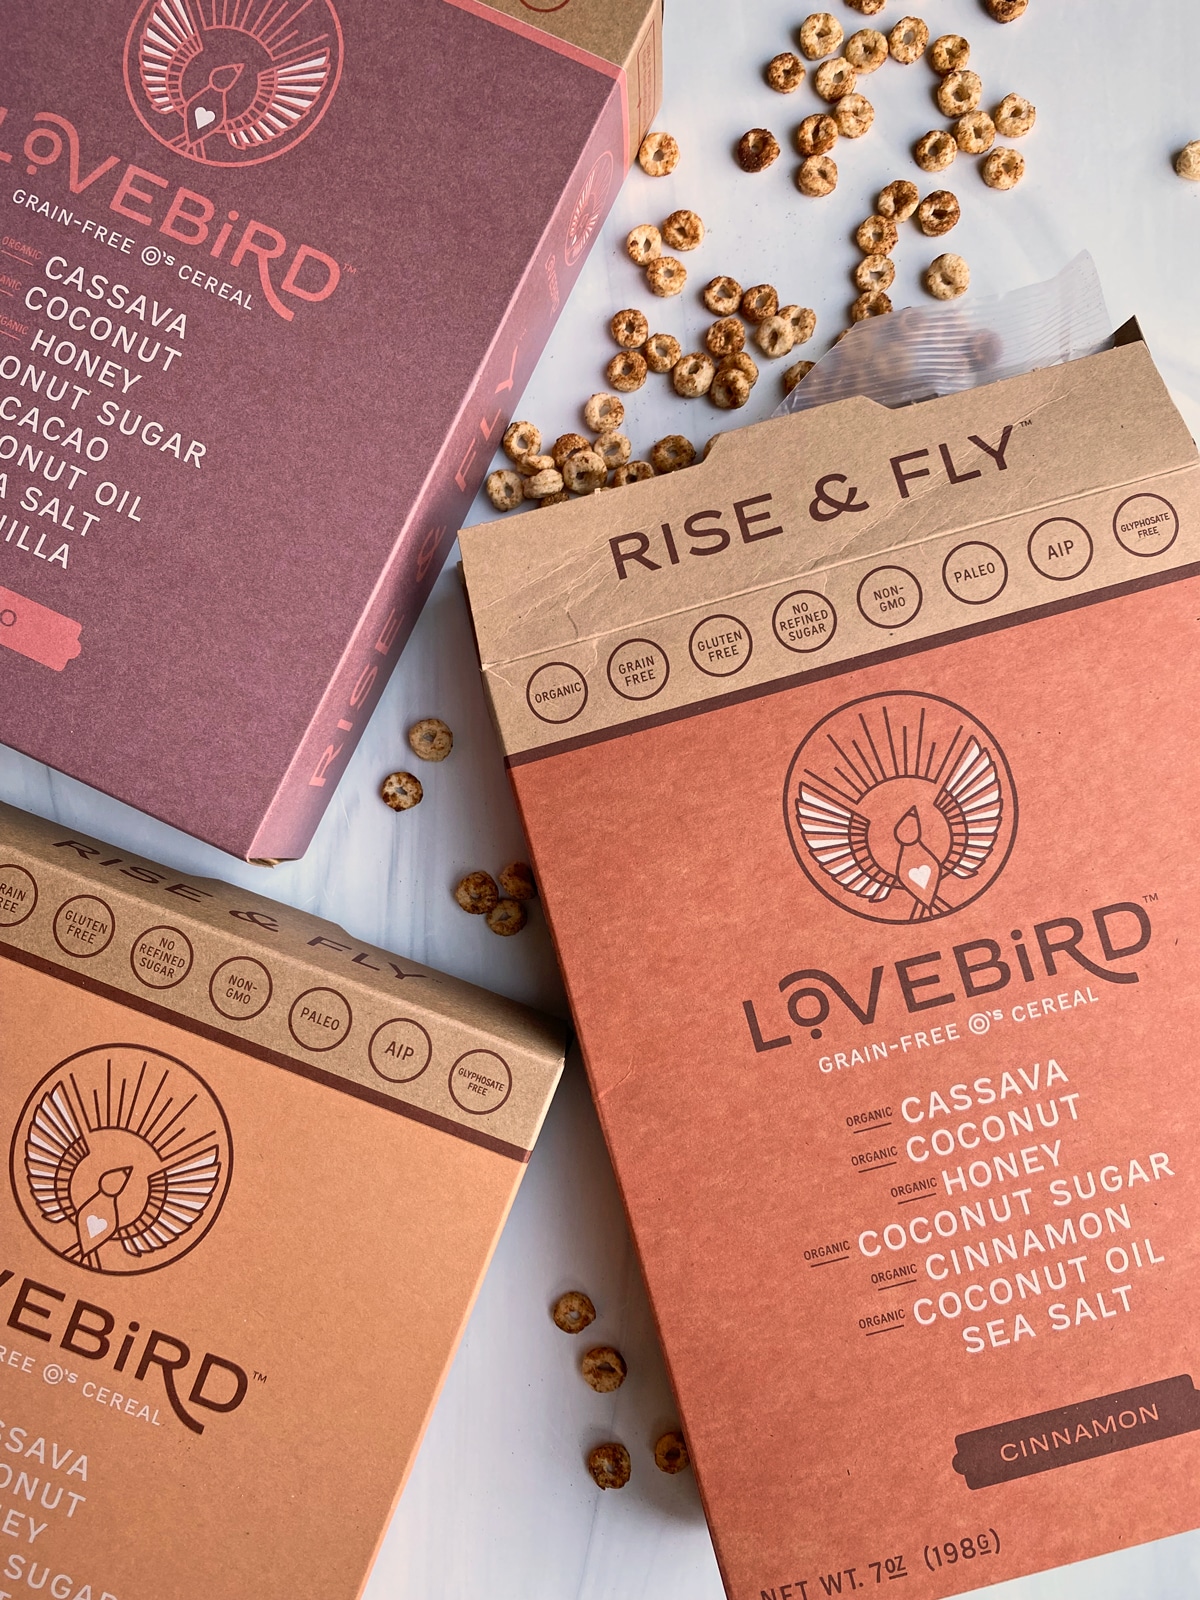 Lovebird grain free cereal: paleo, vegan and AIP